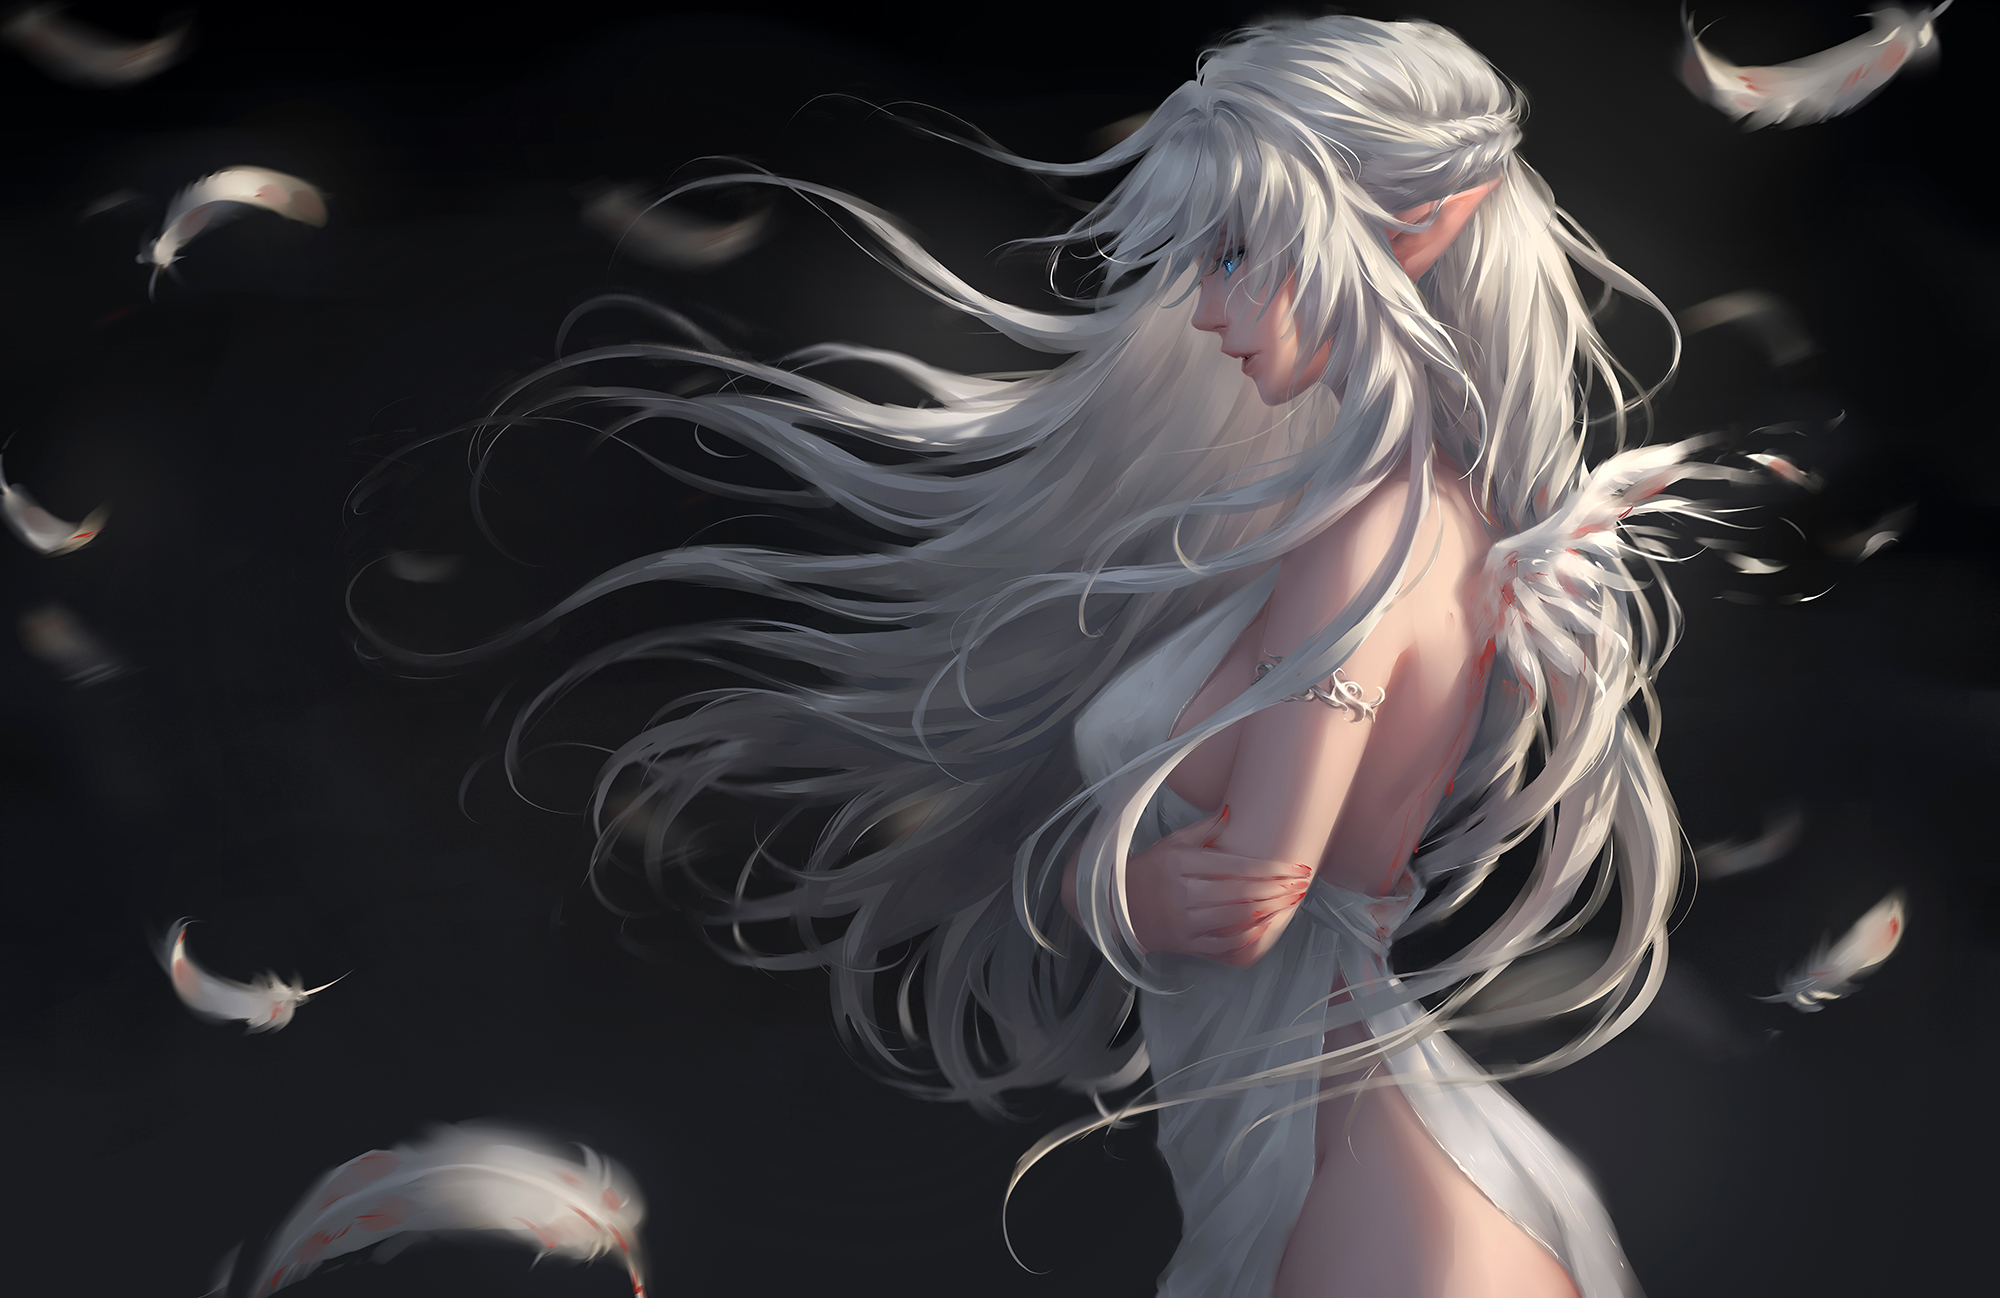 General 2000x1298 chuby mi women artwork digital art drawing wings white hair feathers long hair